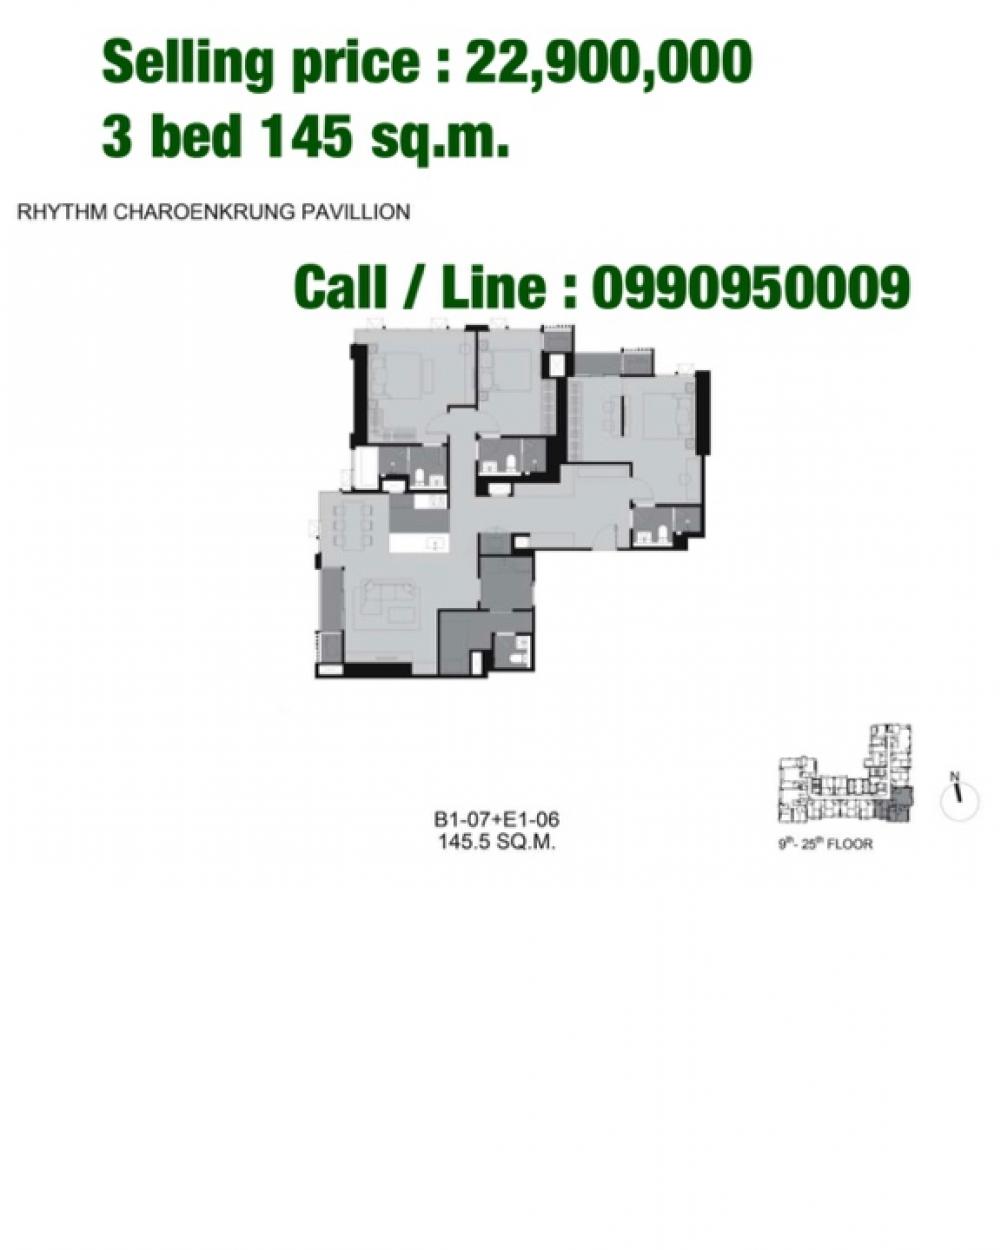 For SaleCondoSathorn, Narathiwat : 3 bed 145 sq.m. Selling price : 22,900,000 call/Line : 0990950009